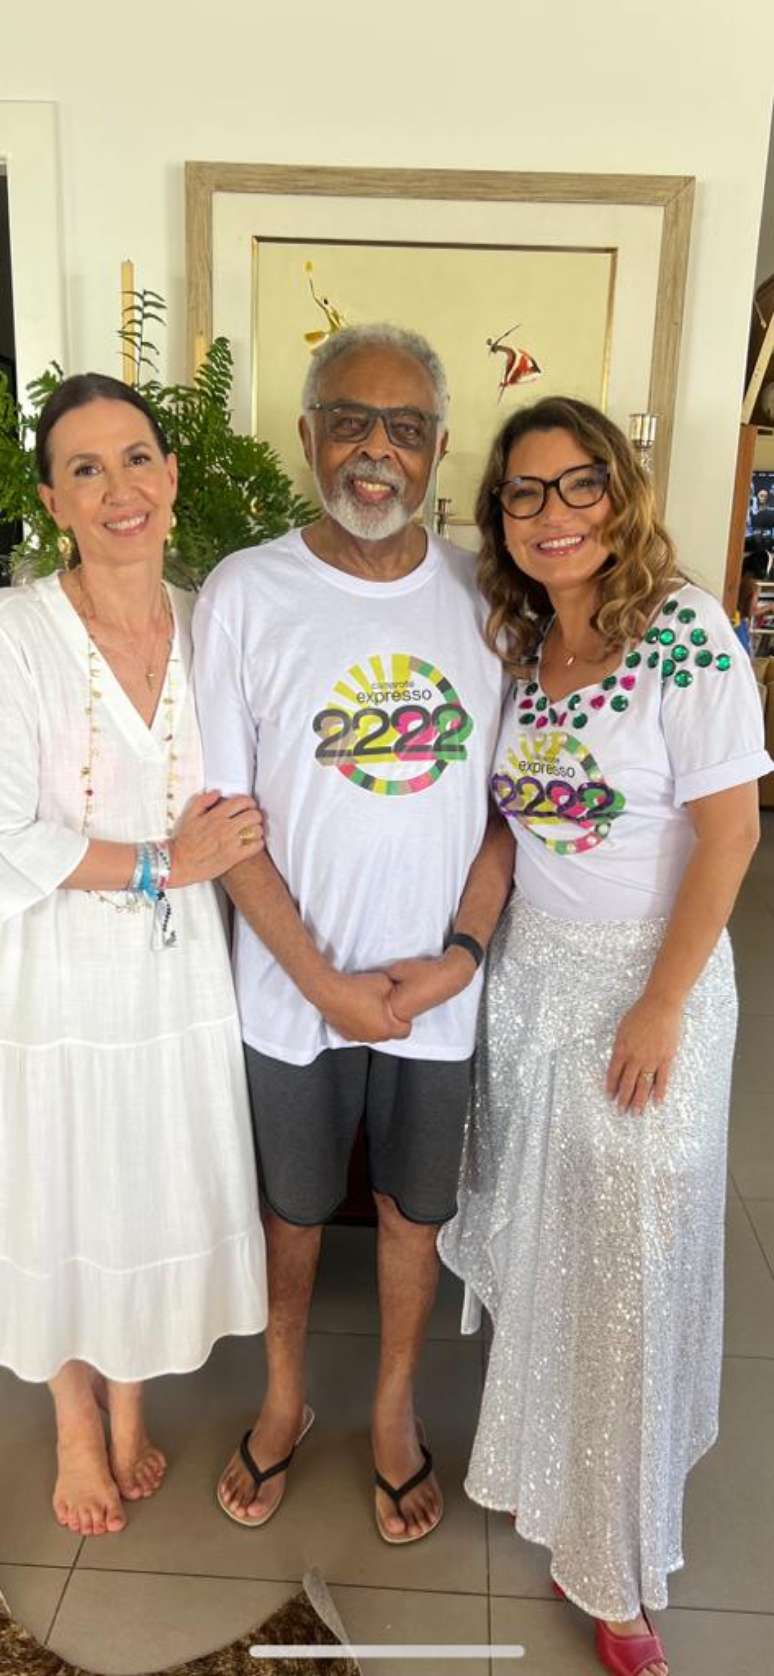 Janja com Gilberto Gil e a mulher dele, Flora Gil